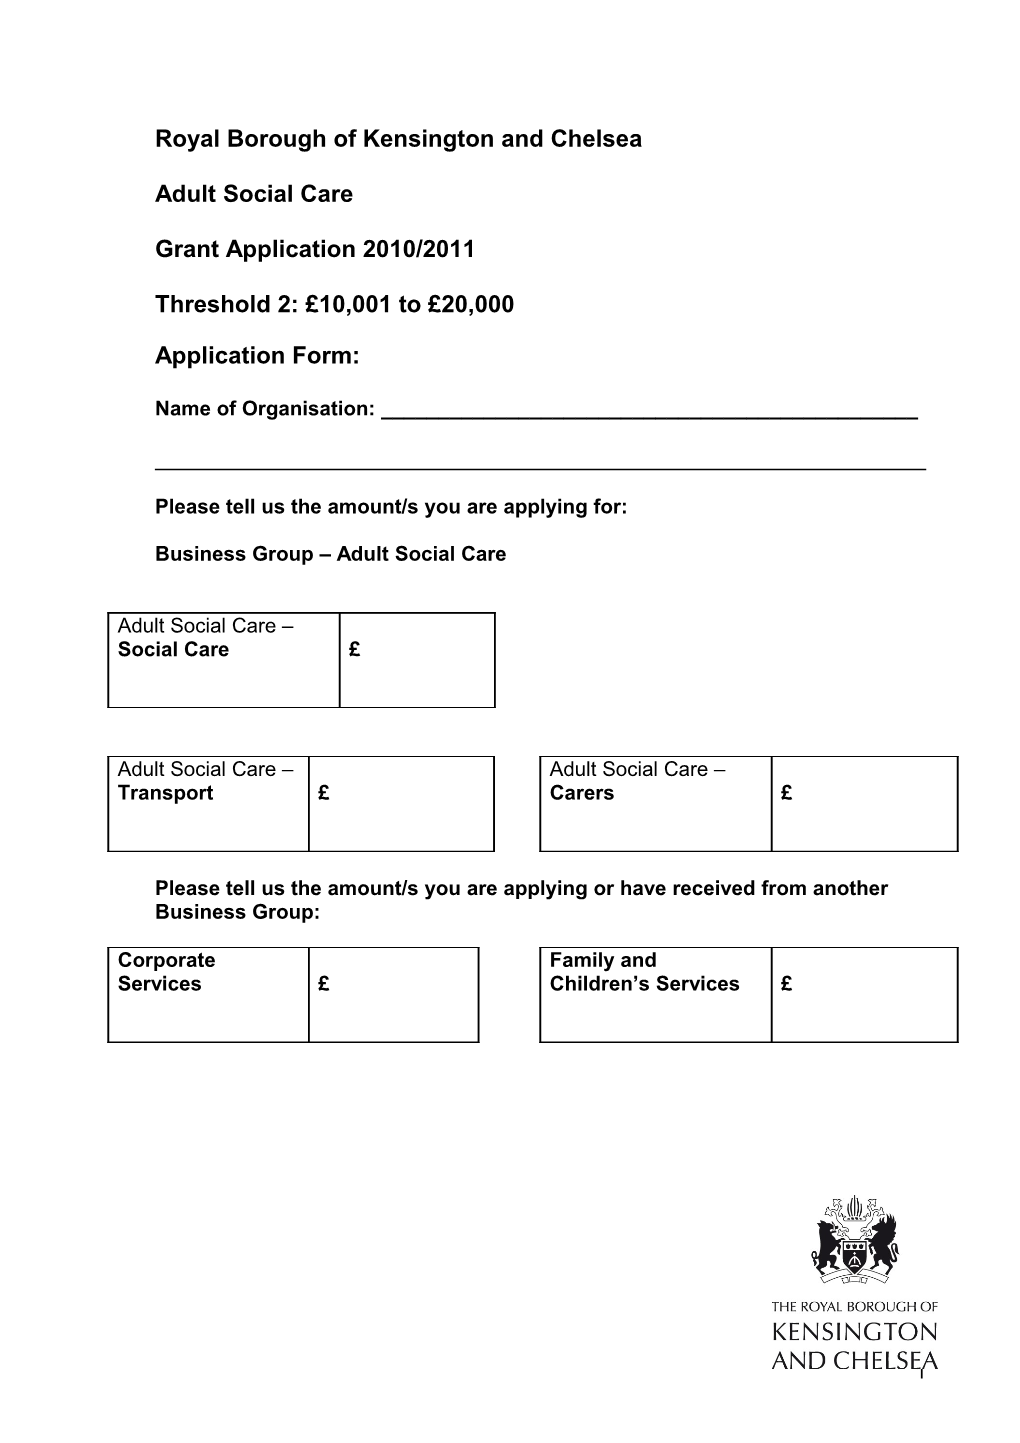 Adult Social Care Grant Application Form 2010/11